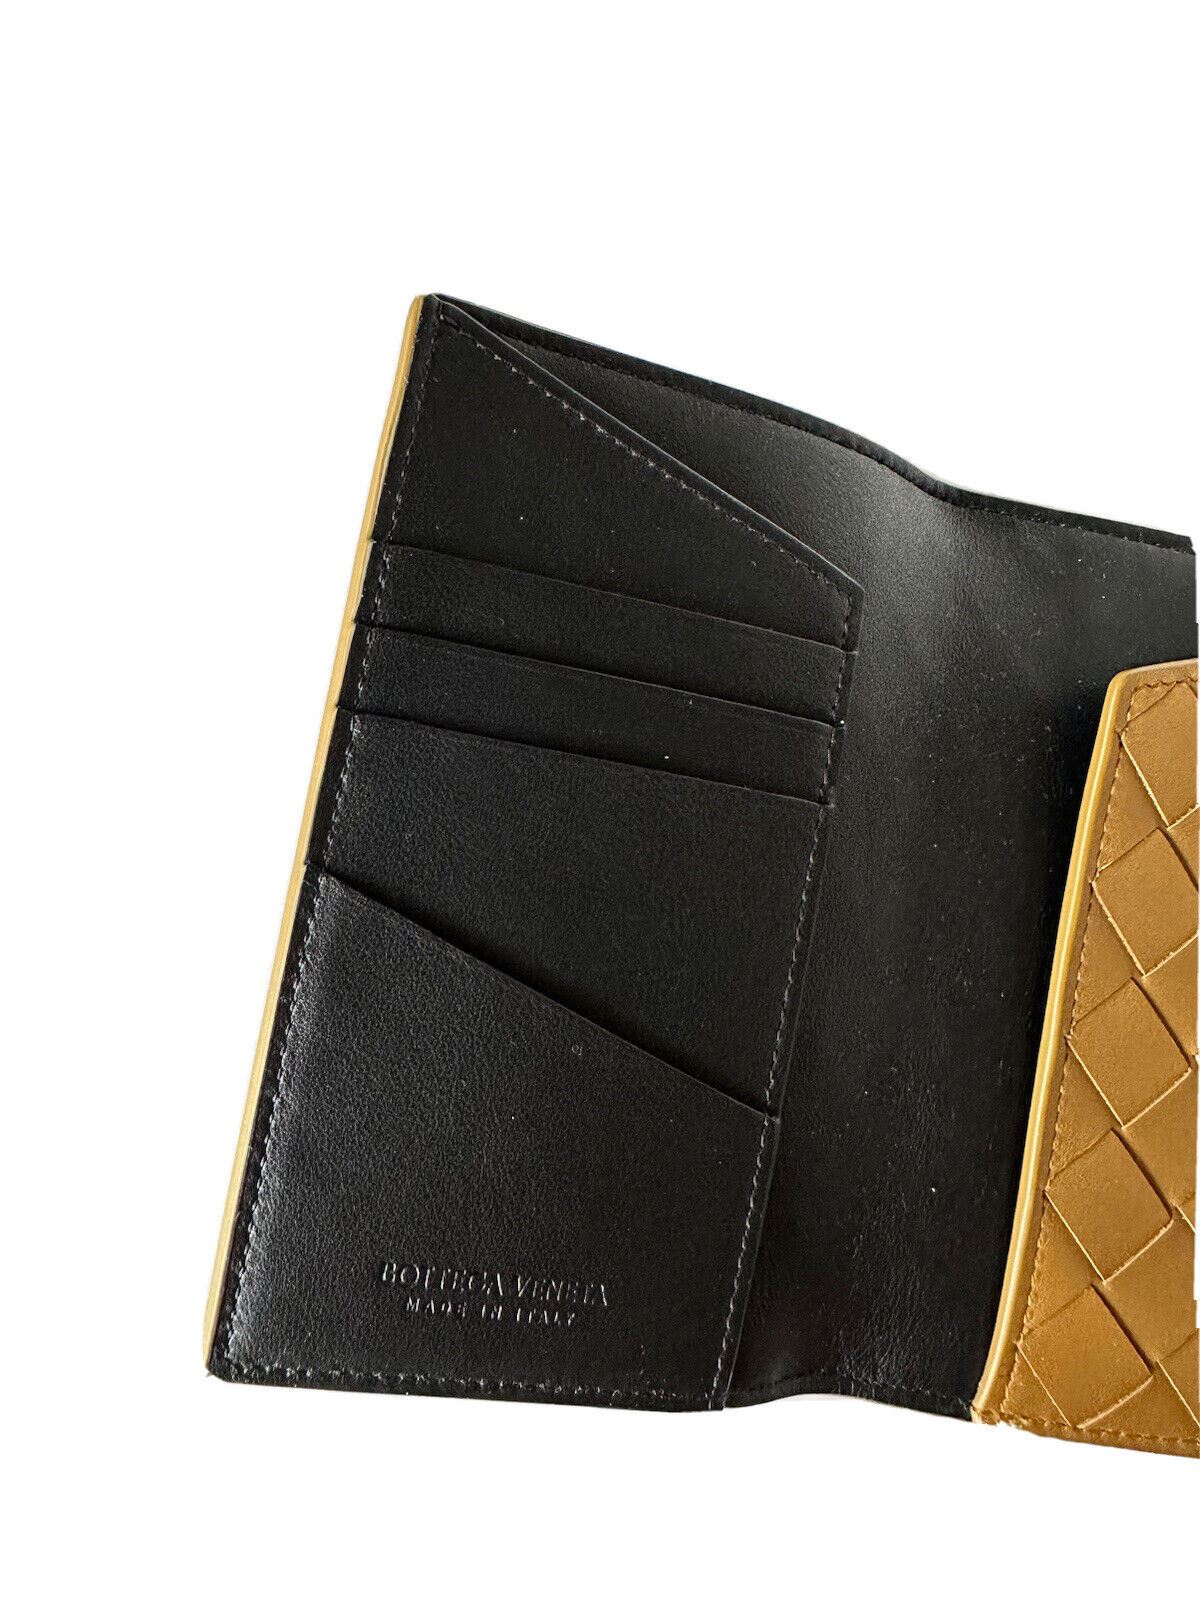 NWT $450 Bottega Veneta Intrecciato Leather Passport Holder Mustard/Black 629679